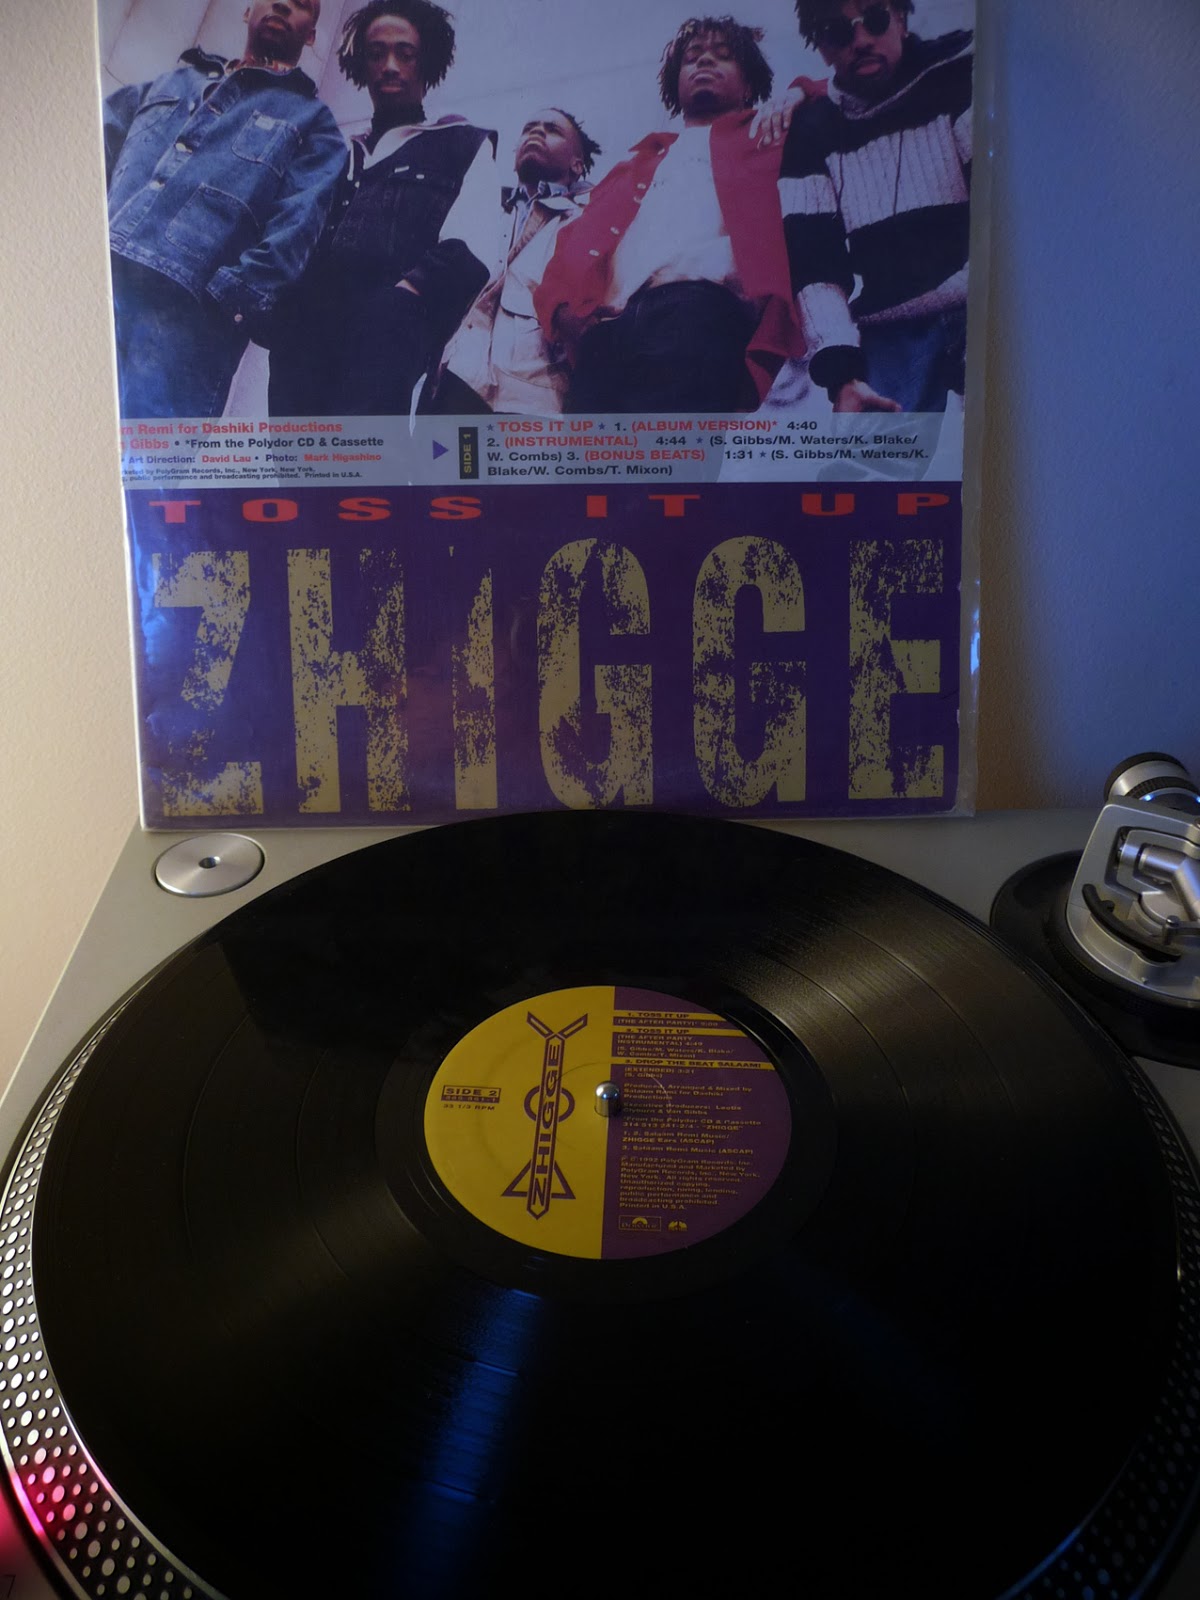 HipHop-TheGoldenEra: Zhigge - Toss It Up - 1992